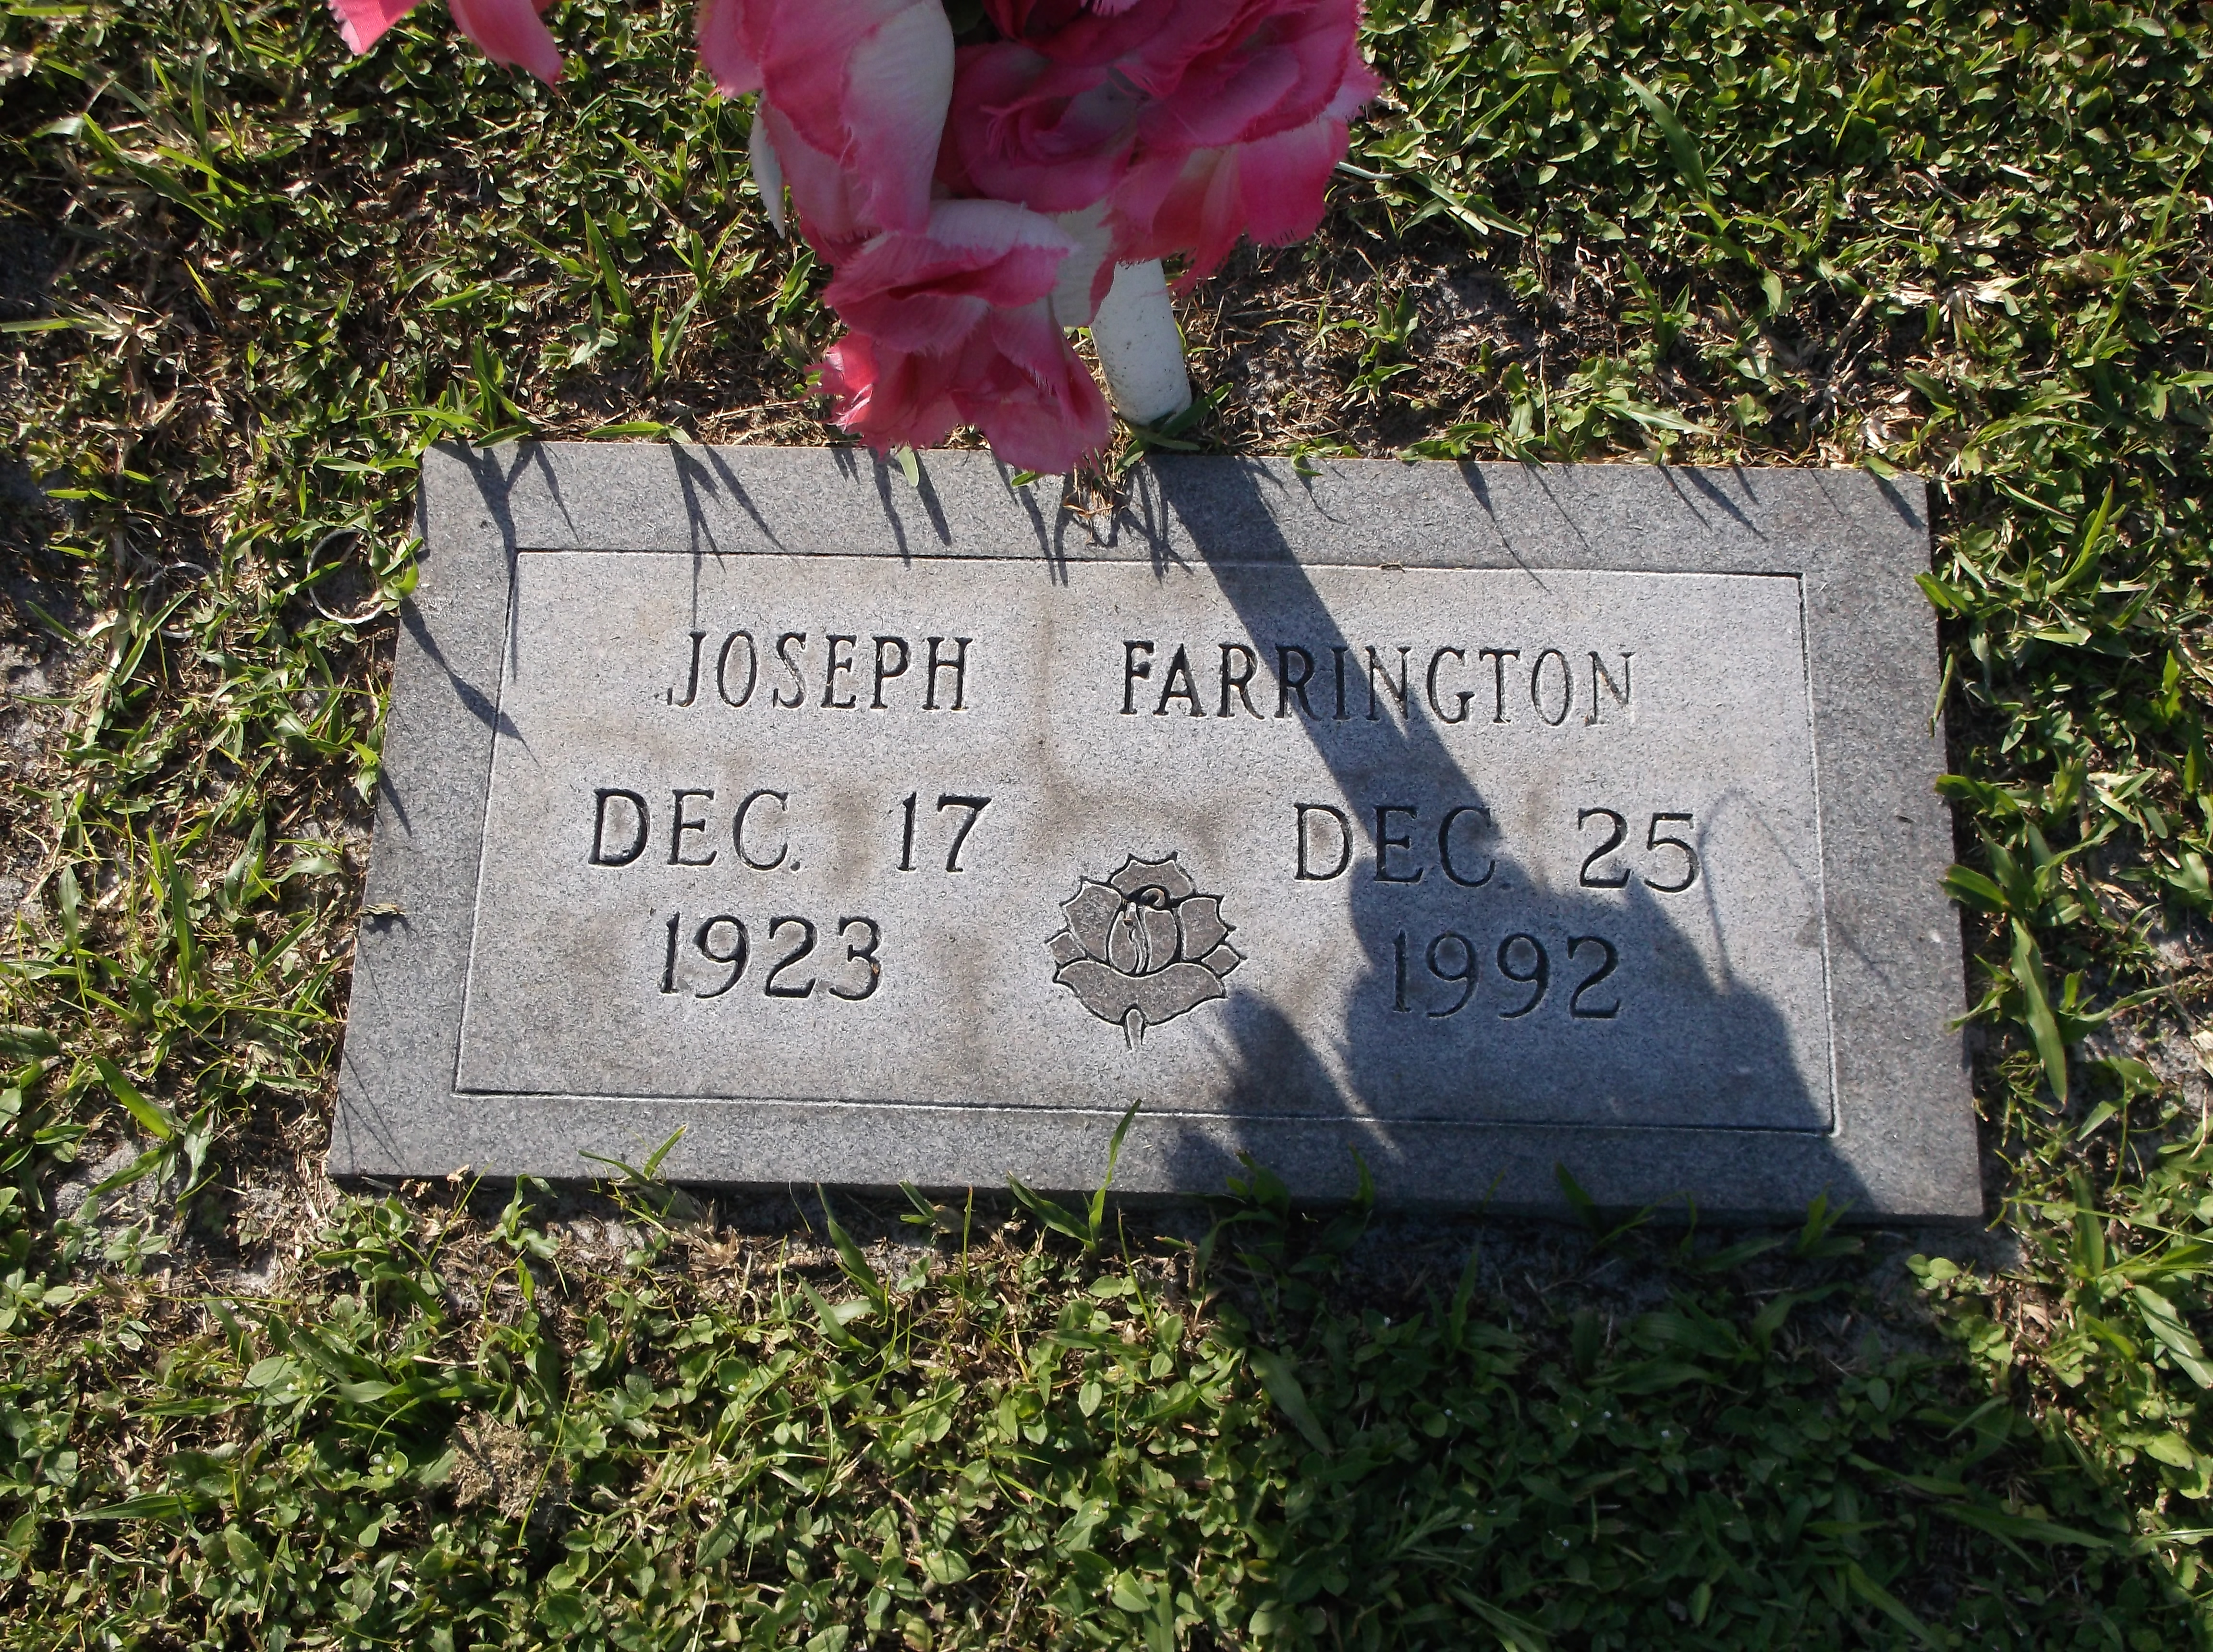 Joseph Farrington